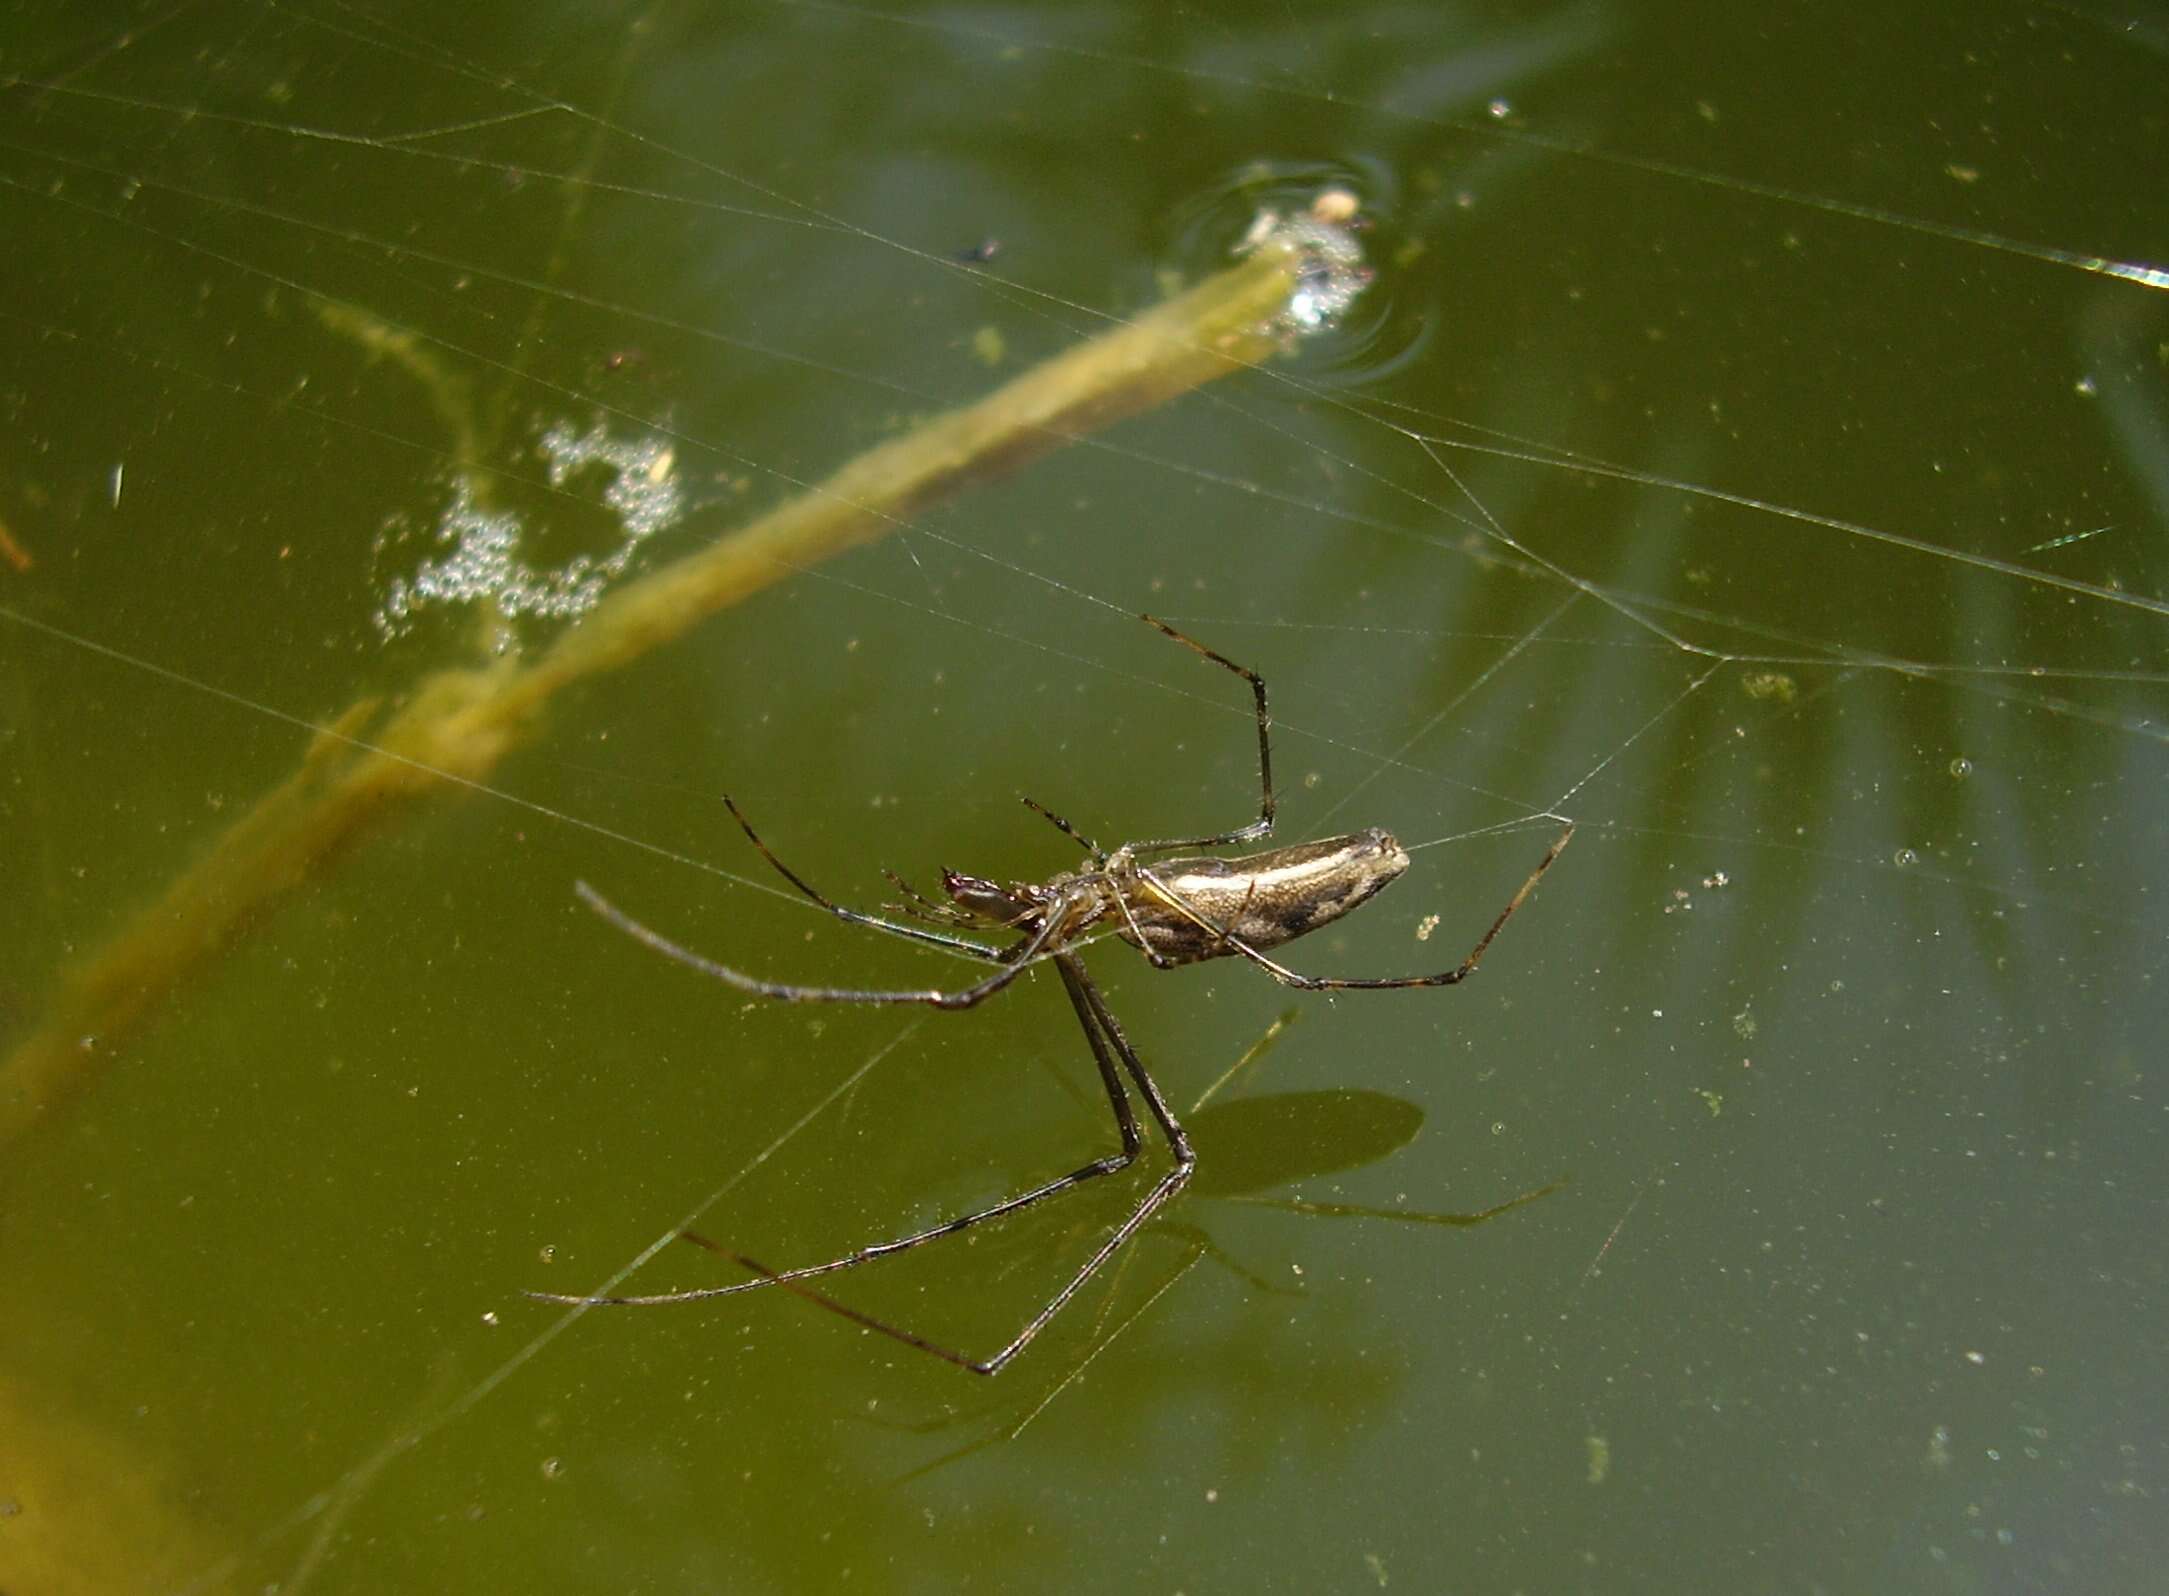 Image of stretch spider